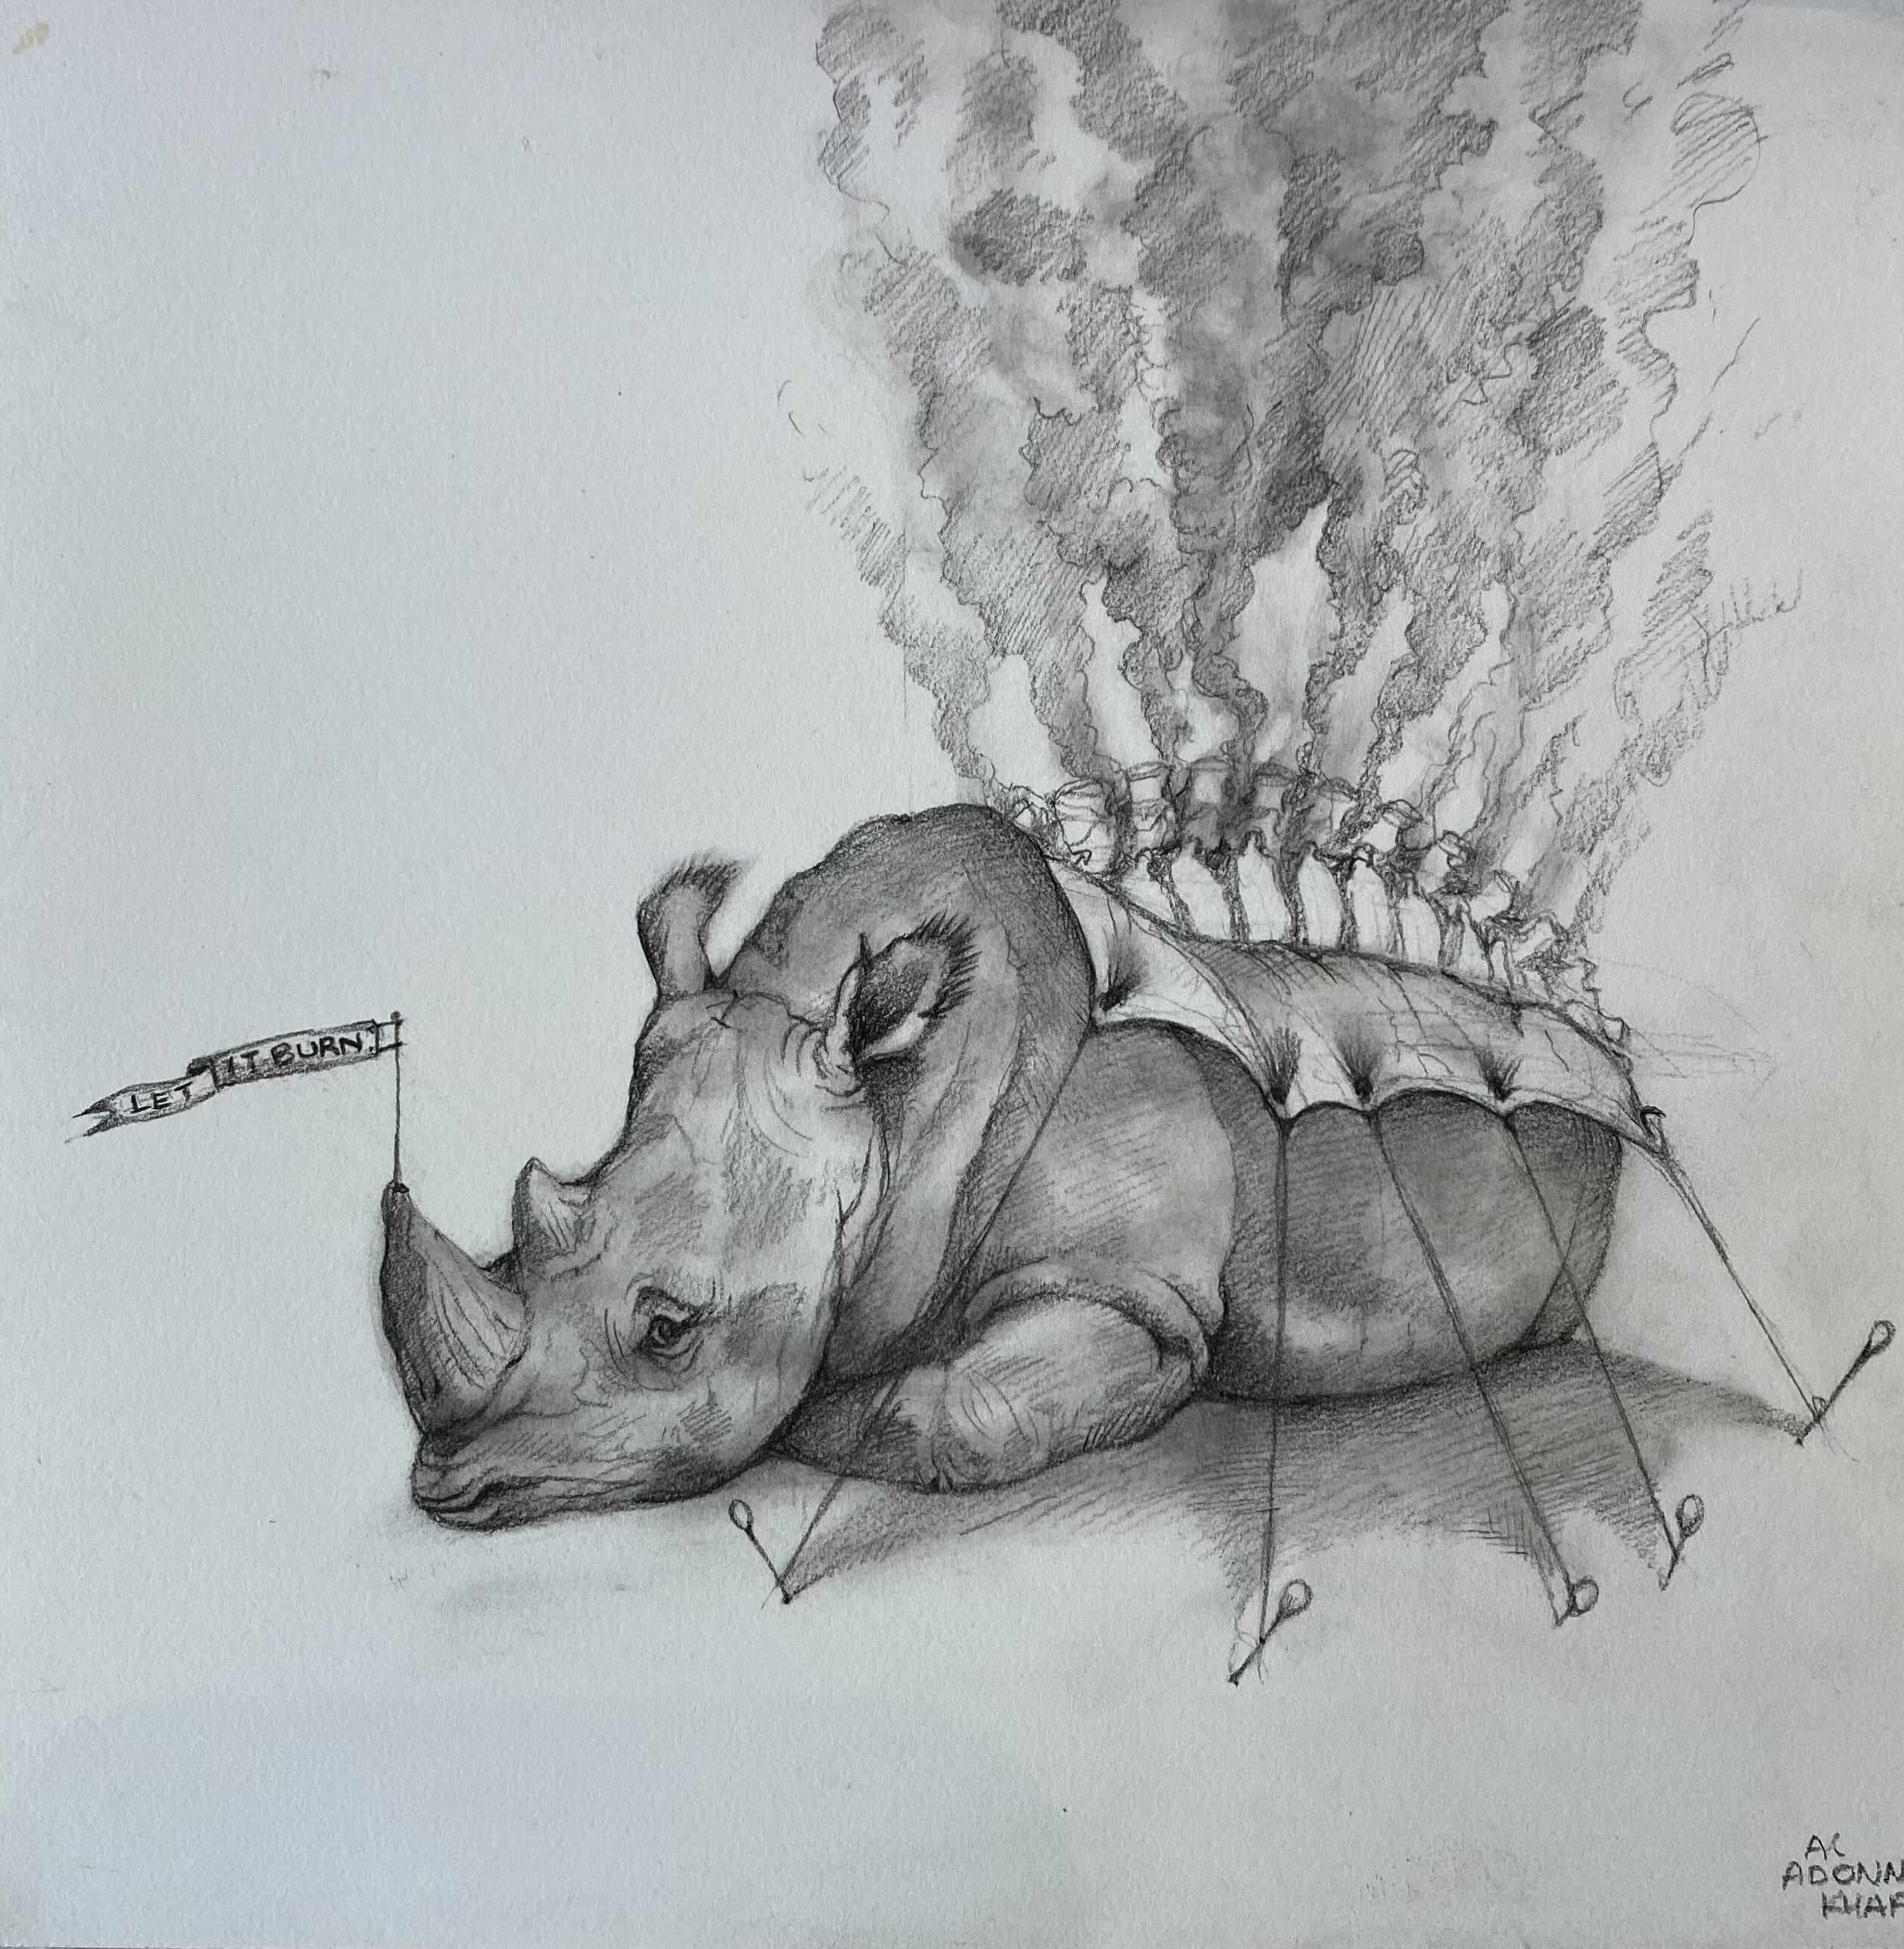 Adonna Khare Animal Art – Let It Burn